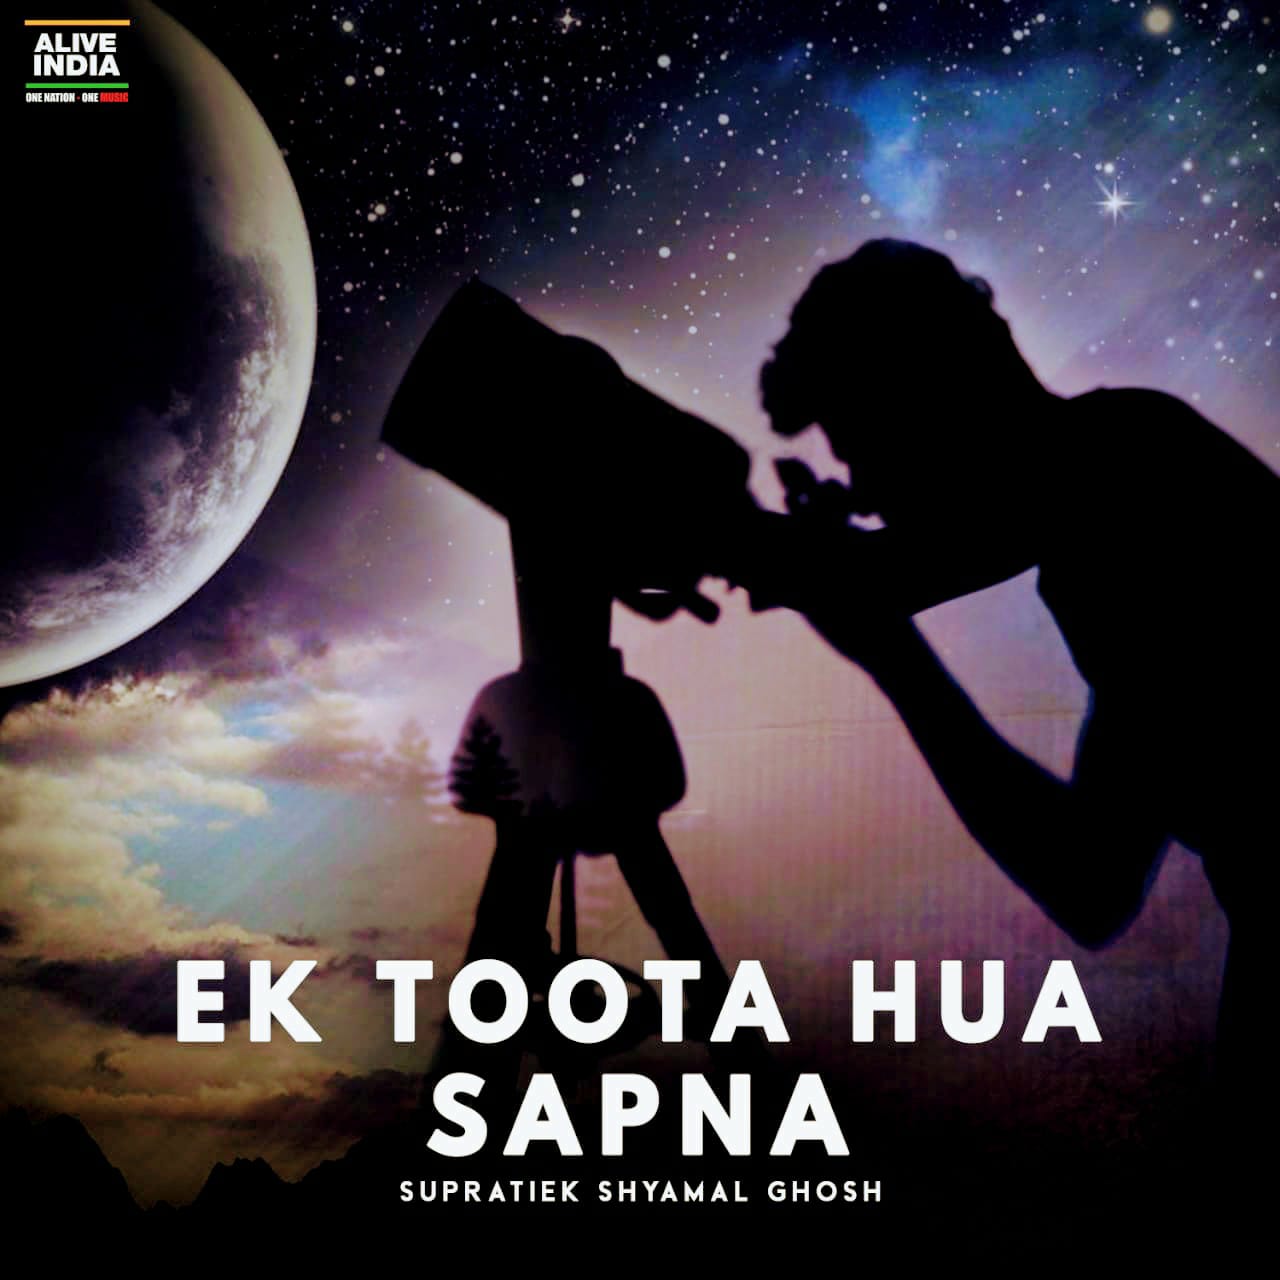 ALIVE INDIA Presents "EK TOOTA HUA SAPNA" - A tribute of Sushant Singh Rajput